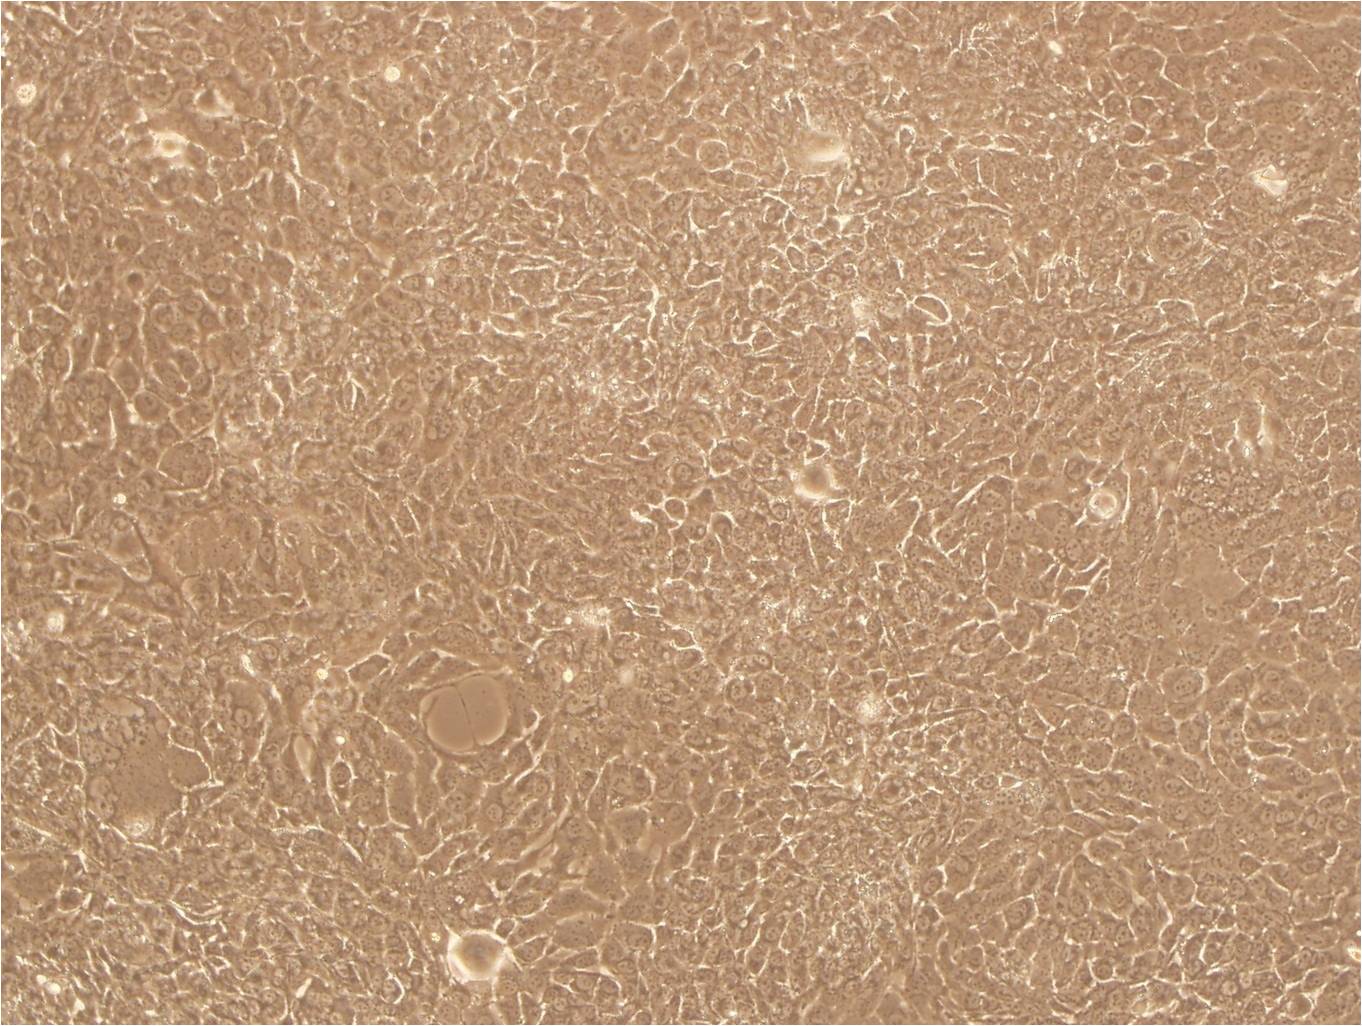 DU4475:人乳腺上皮复苏细胞(提供STR鉴定图谱),DU4475